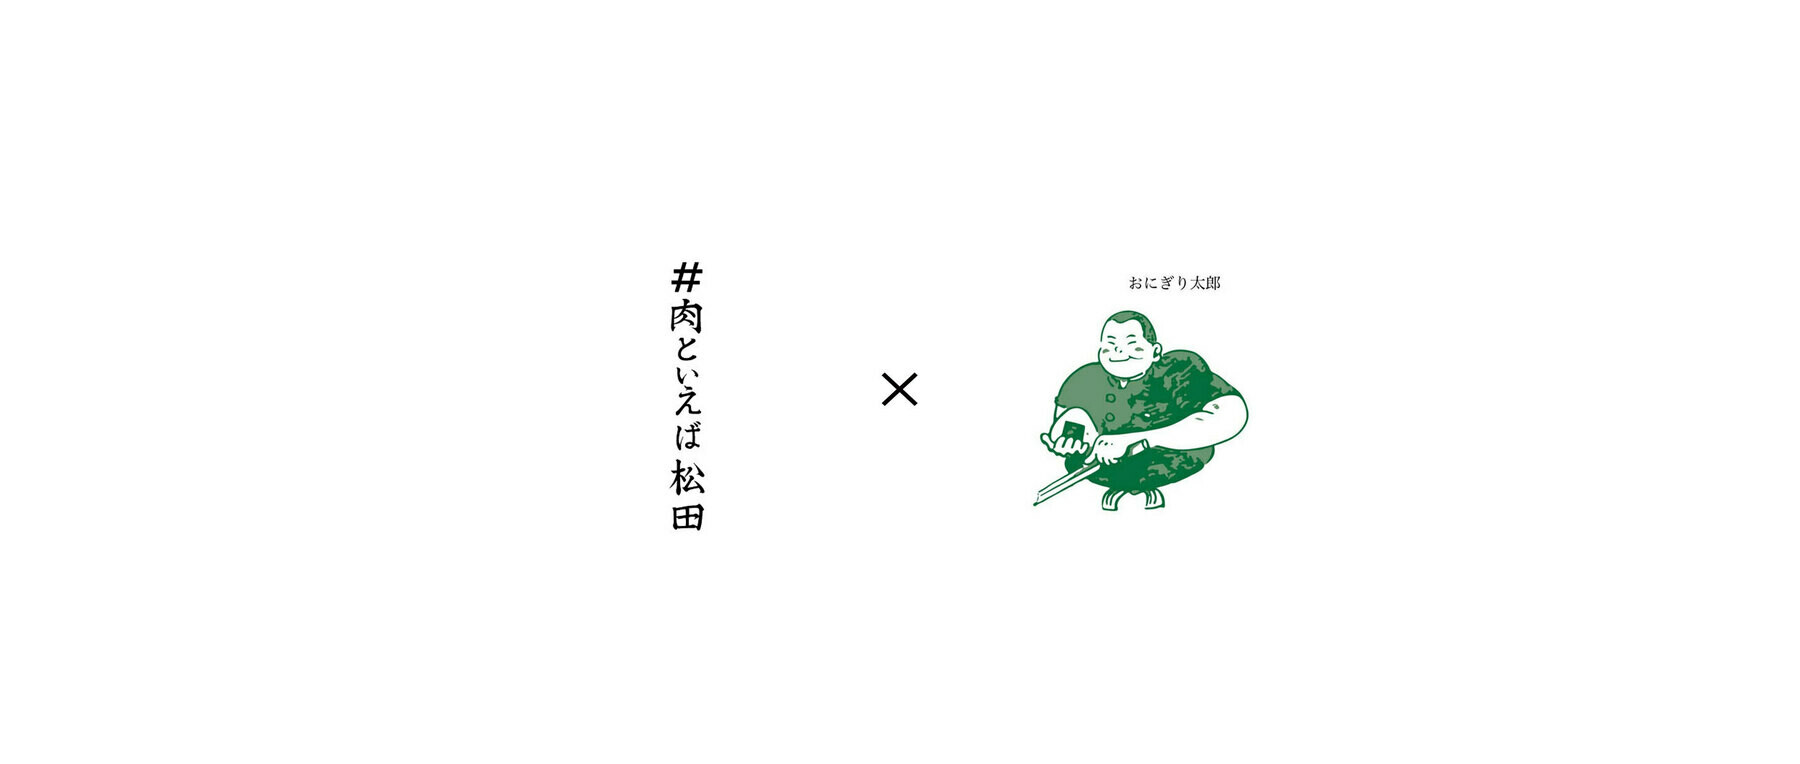 【Acceptance of applications closed】＃Nikutoieba MATSUDA ×Onigiri Taro's image